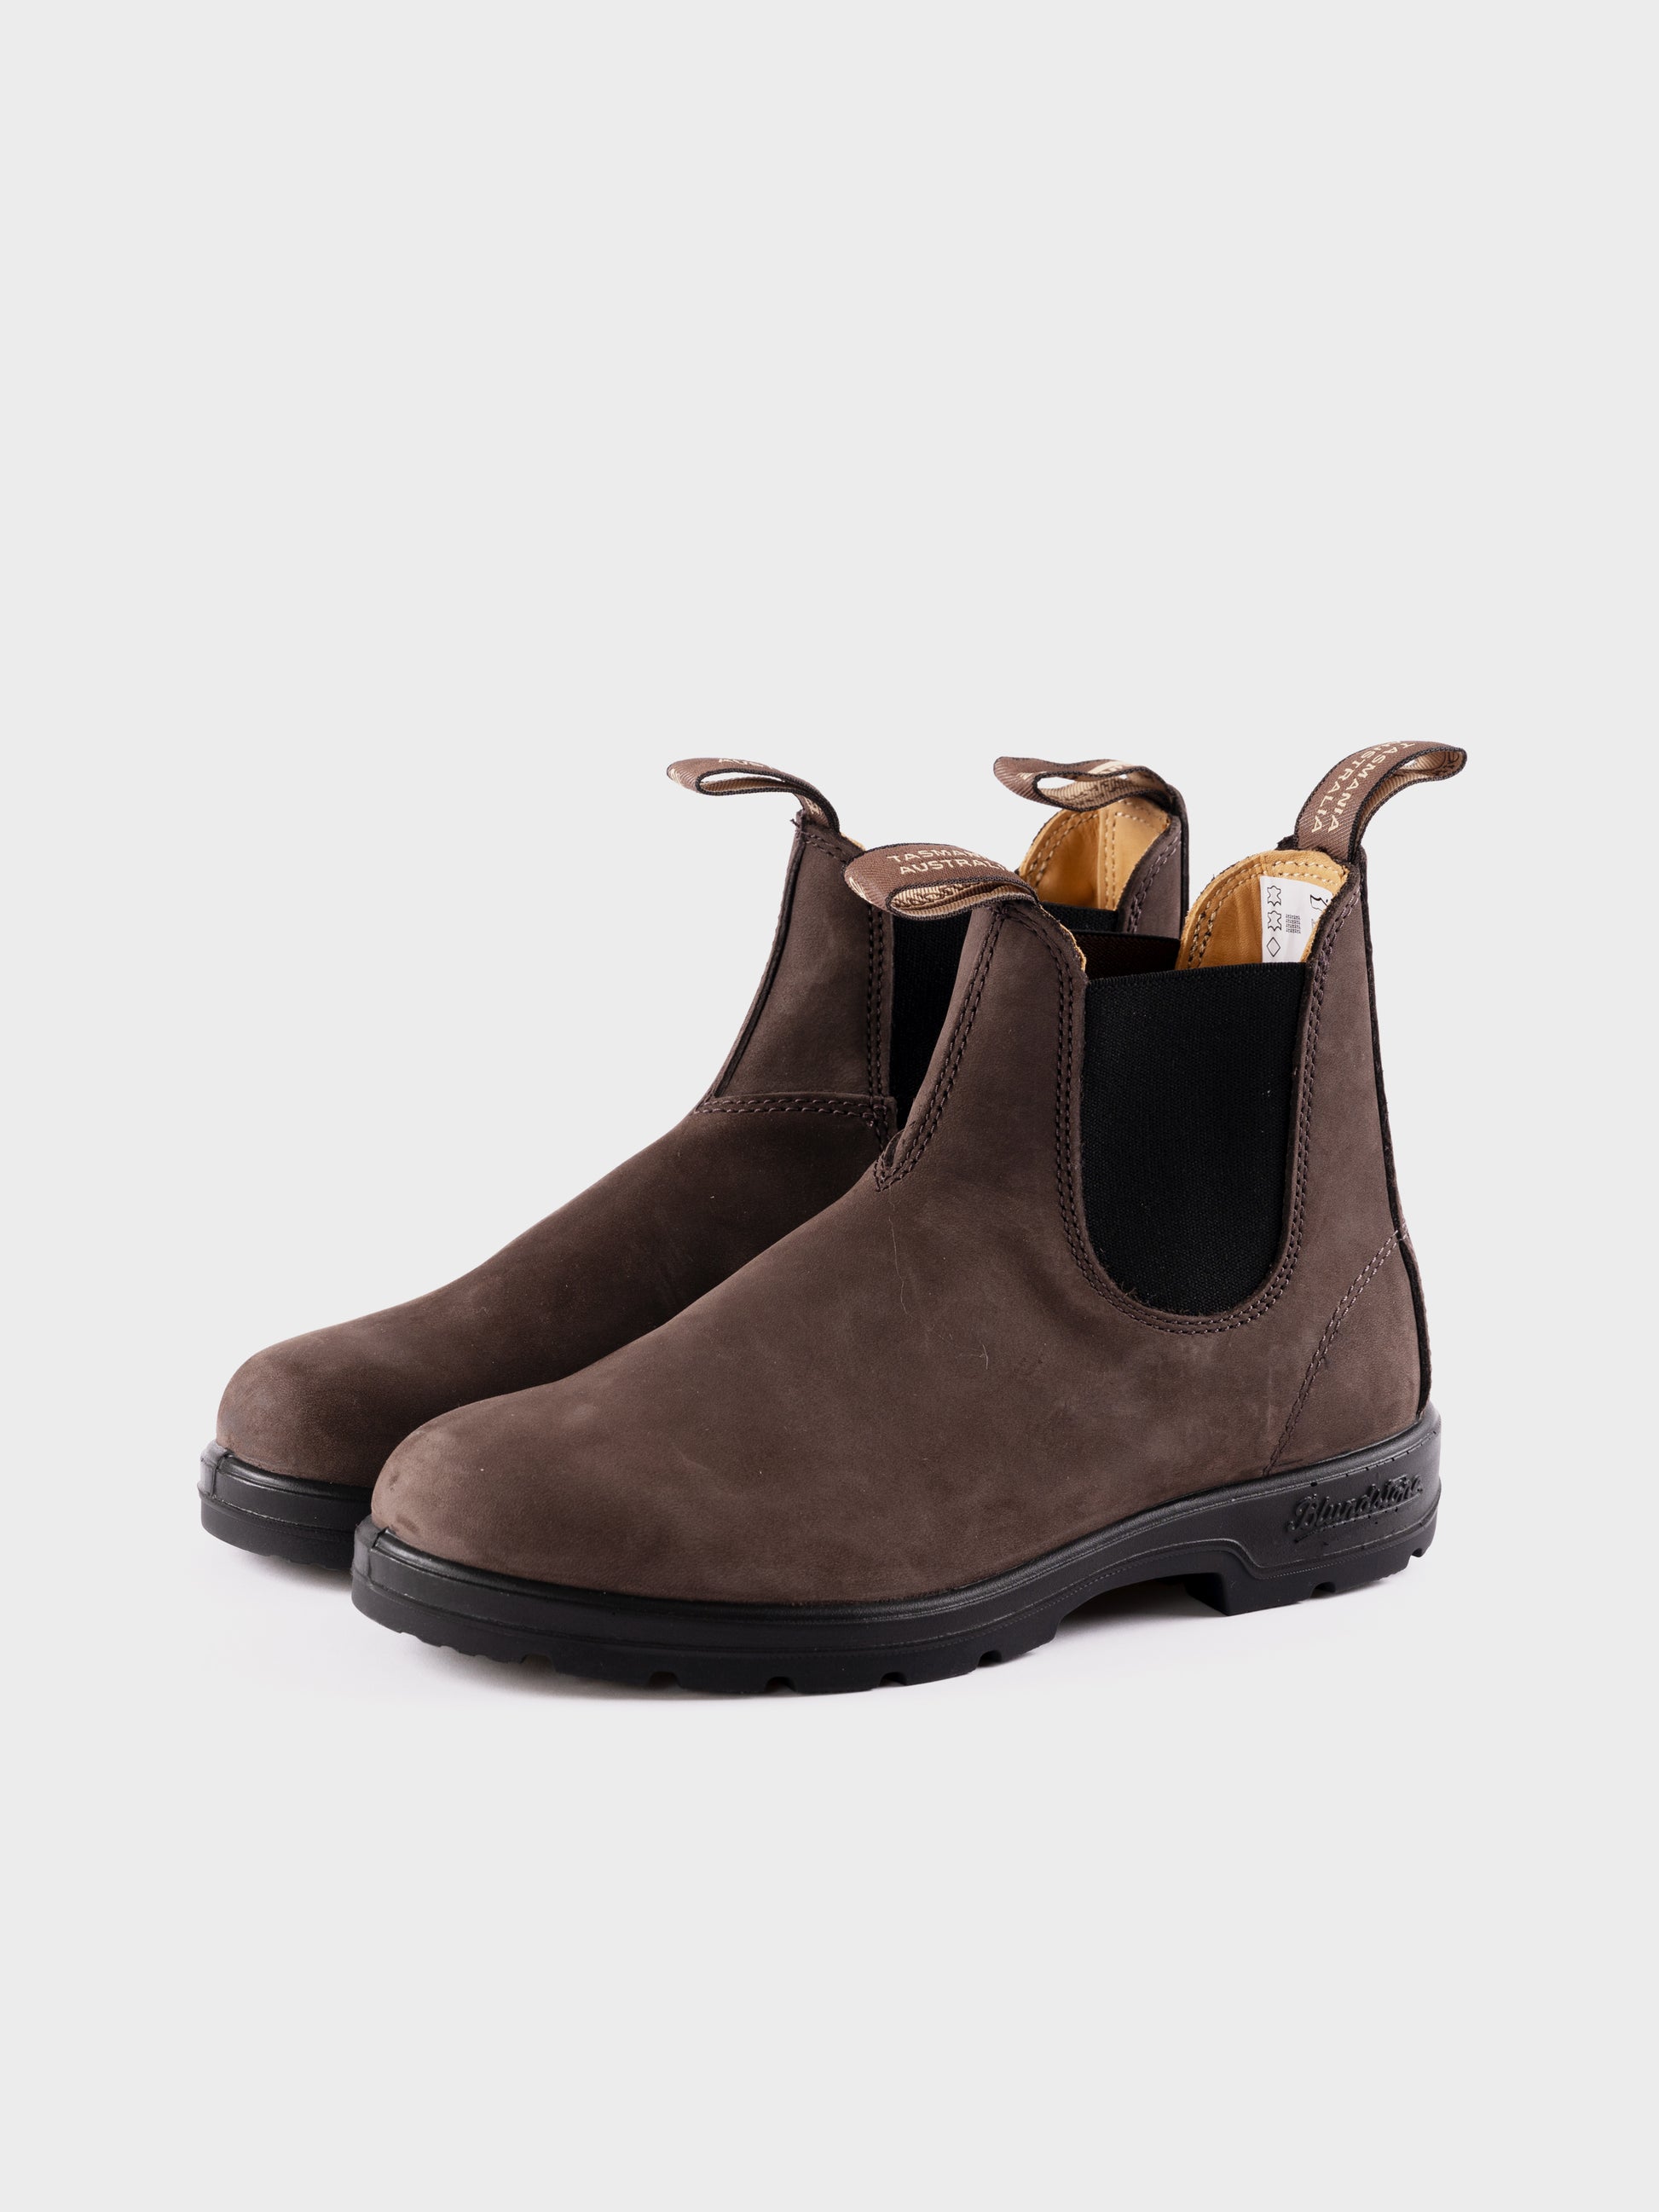 Blundstone Boots - 2345 - Brown Nubuck